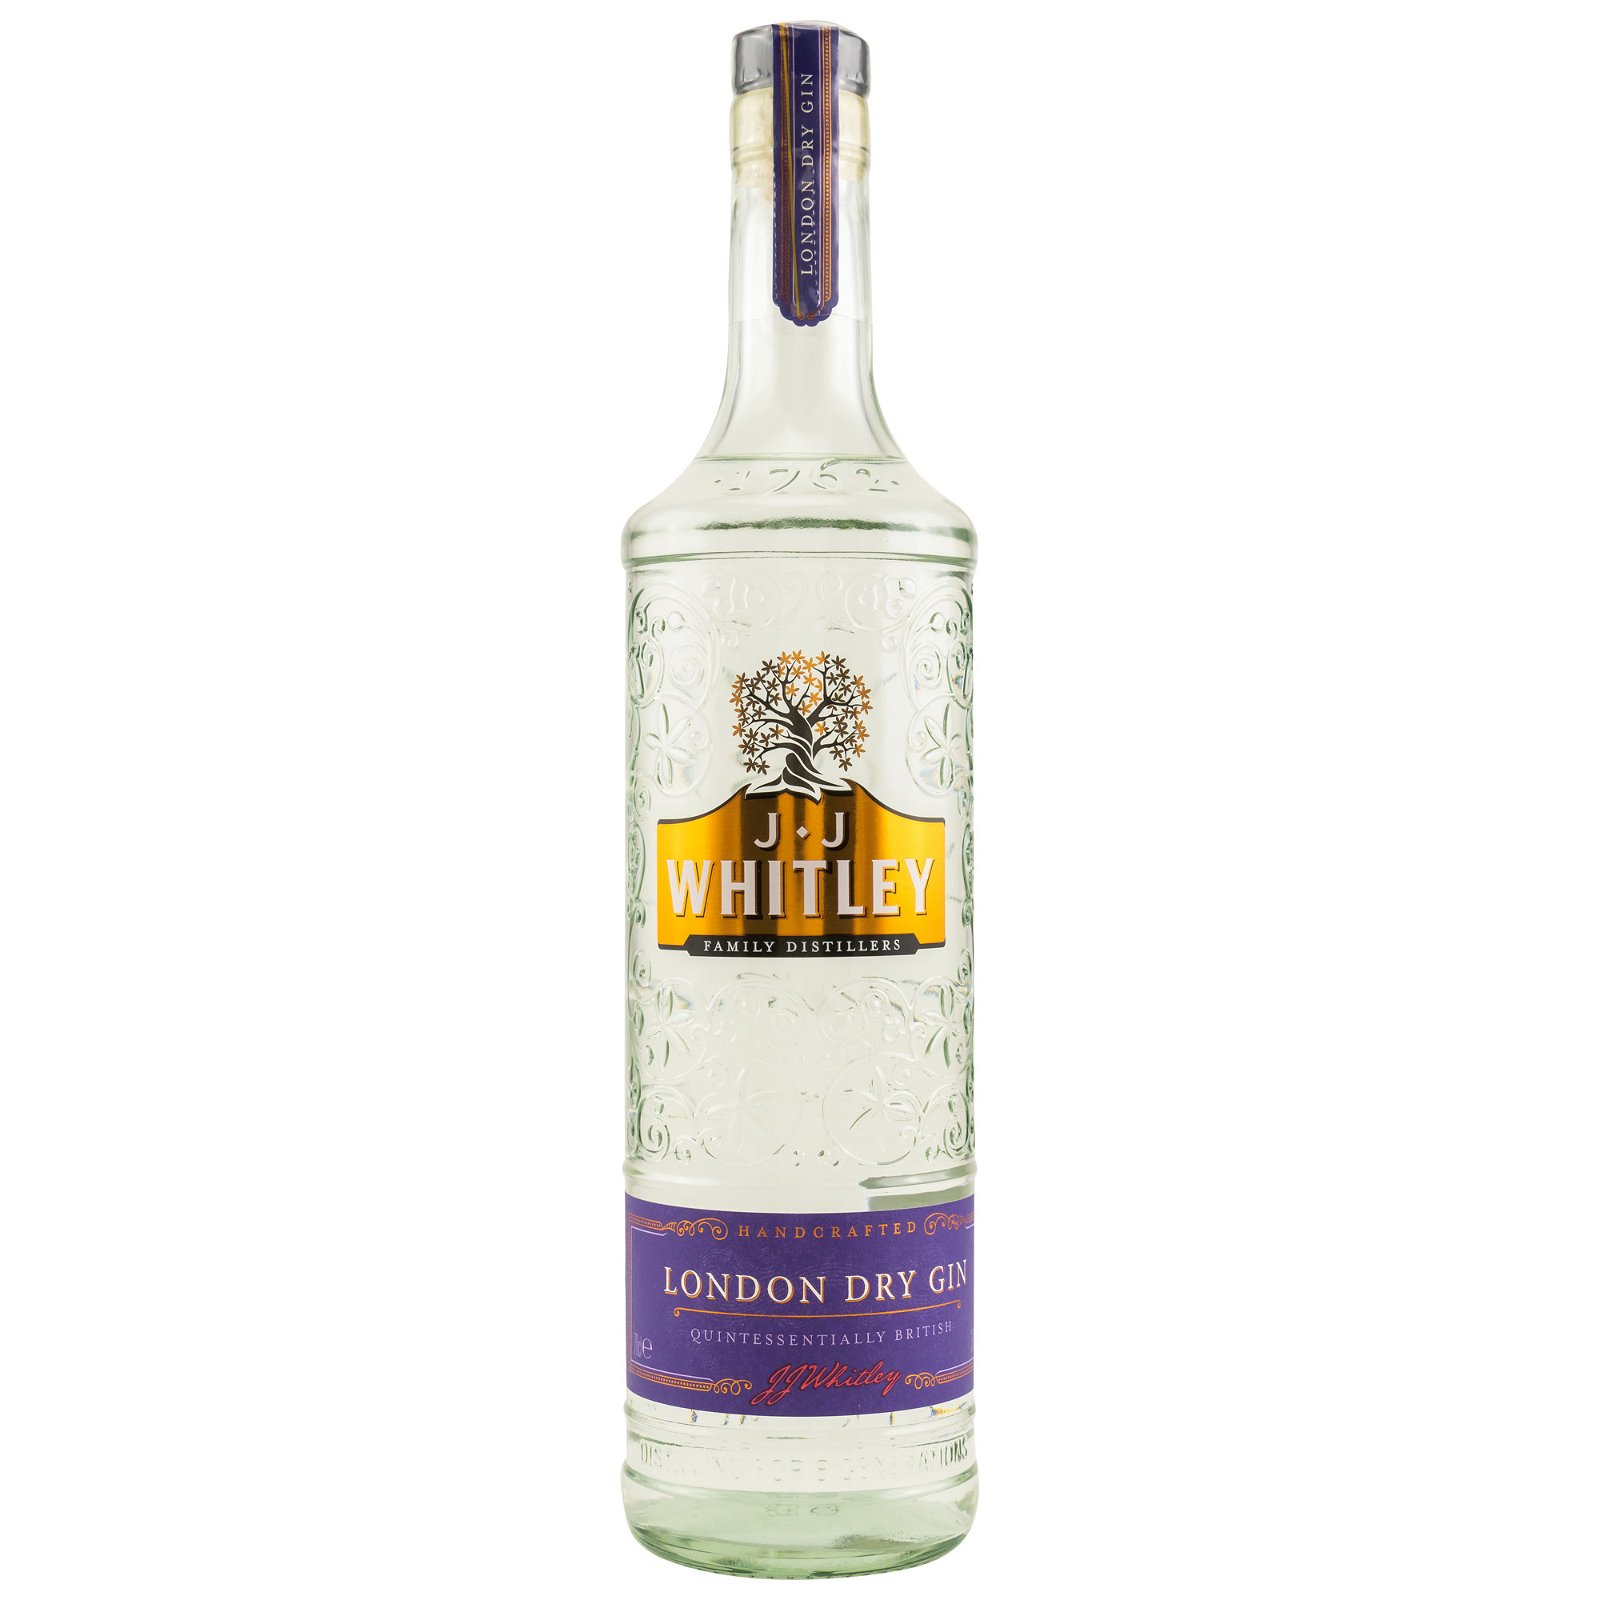 J. J. Whitley London Dry Gin (37,5%)